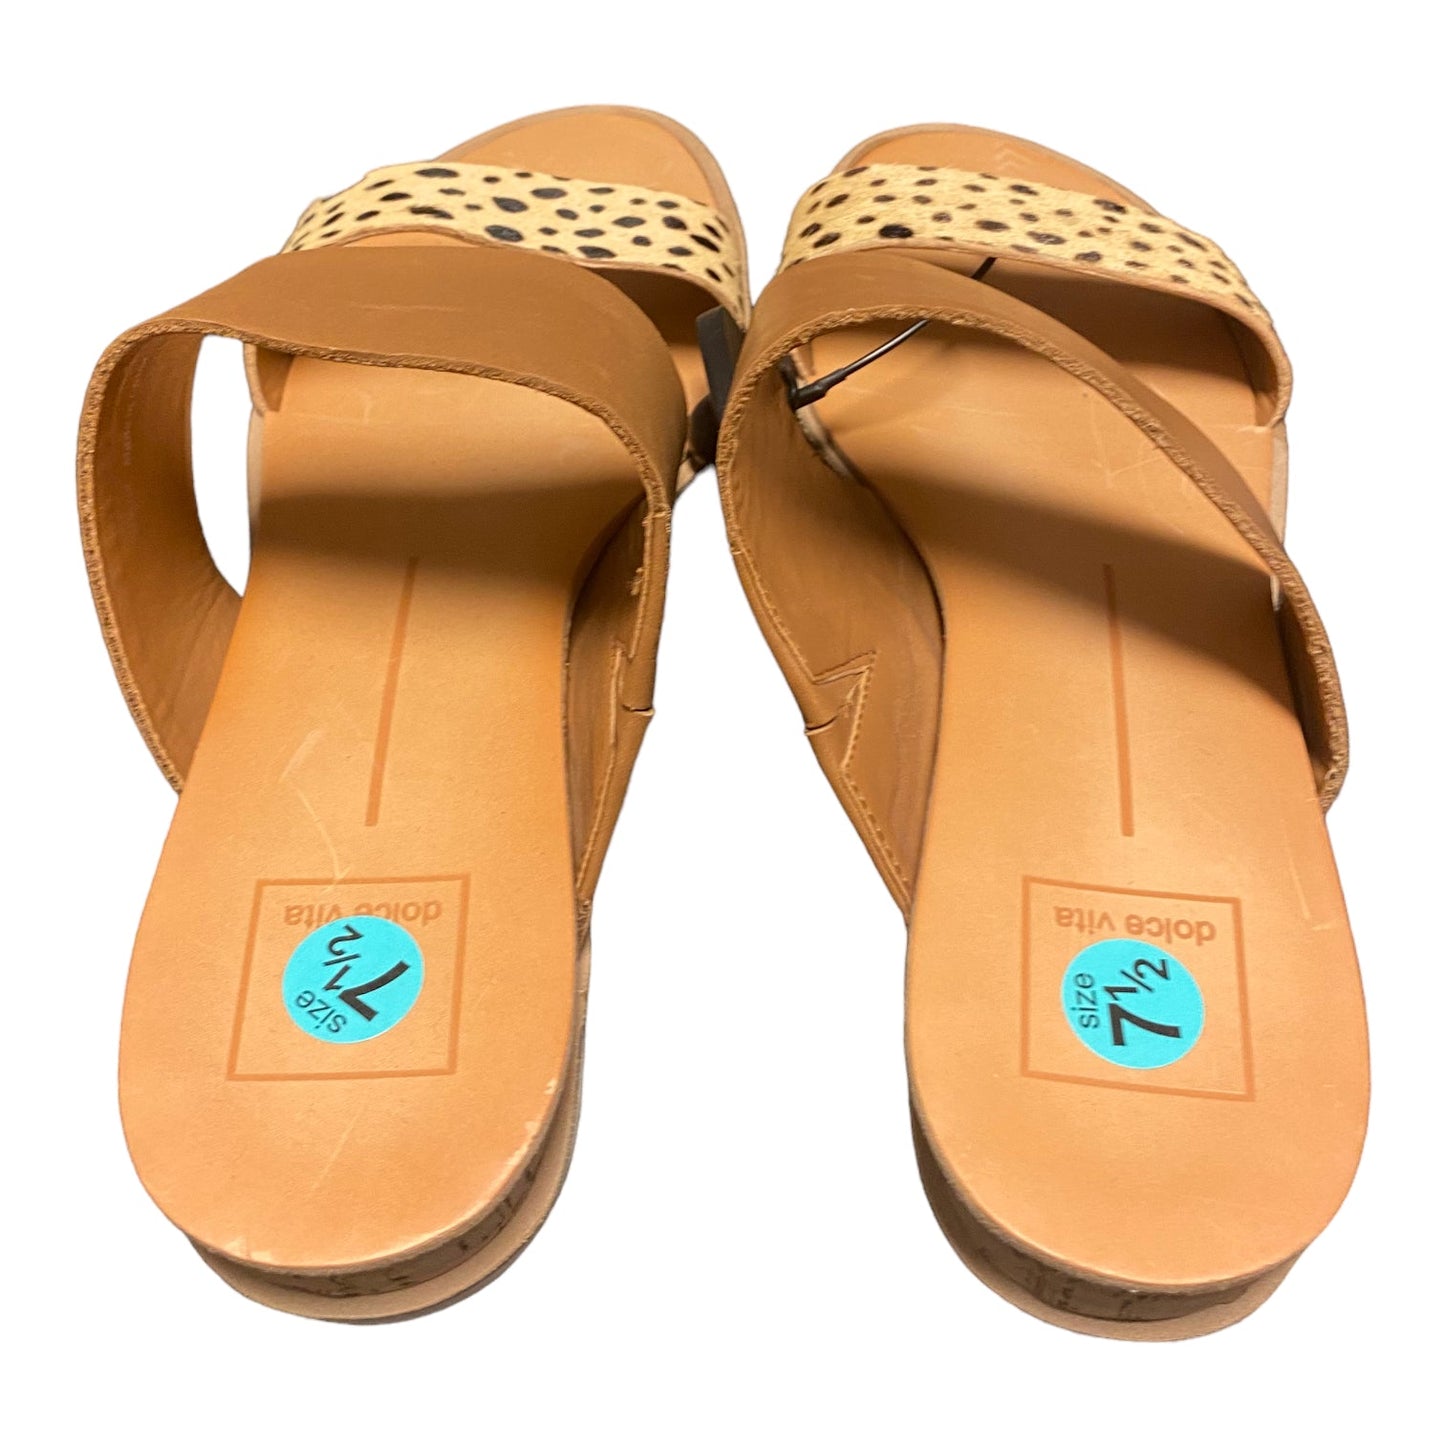 Tan Sandals Flats Dolce Vita, Size 7.5